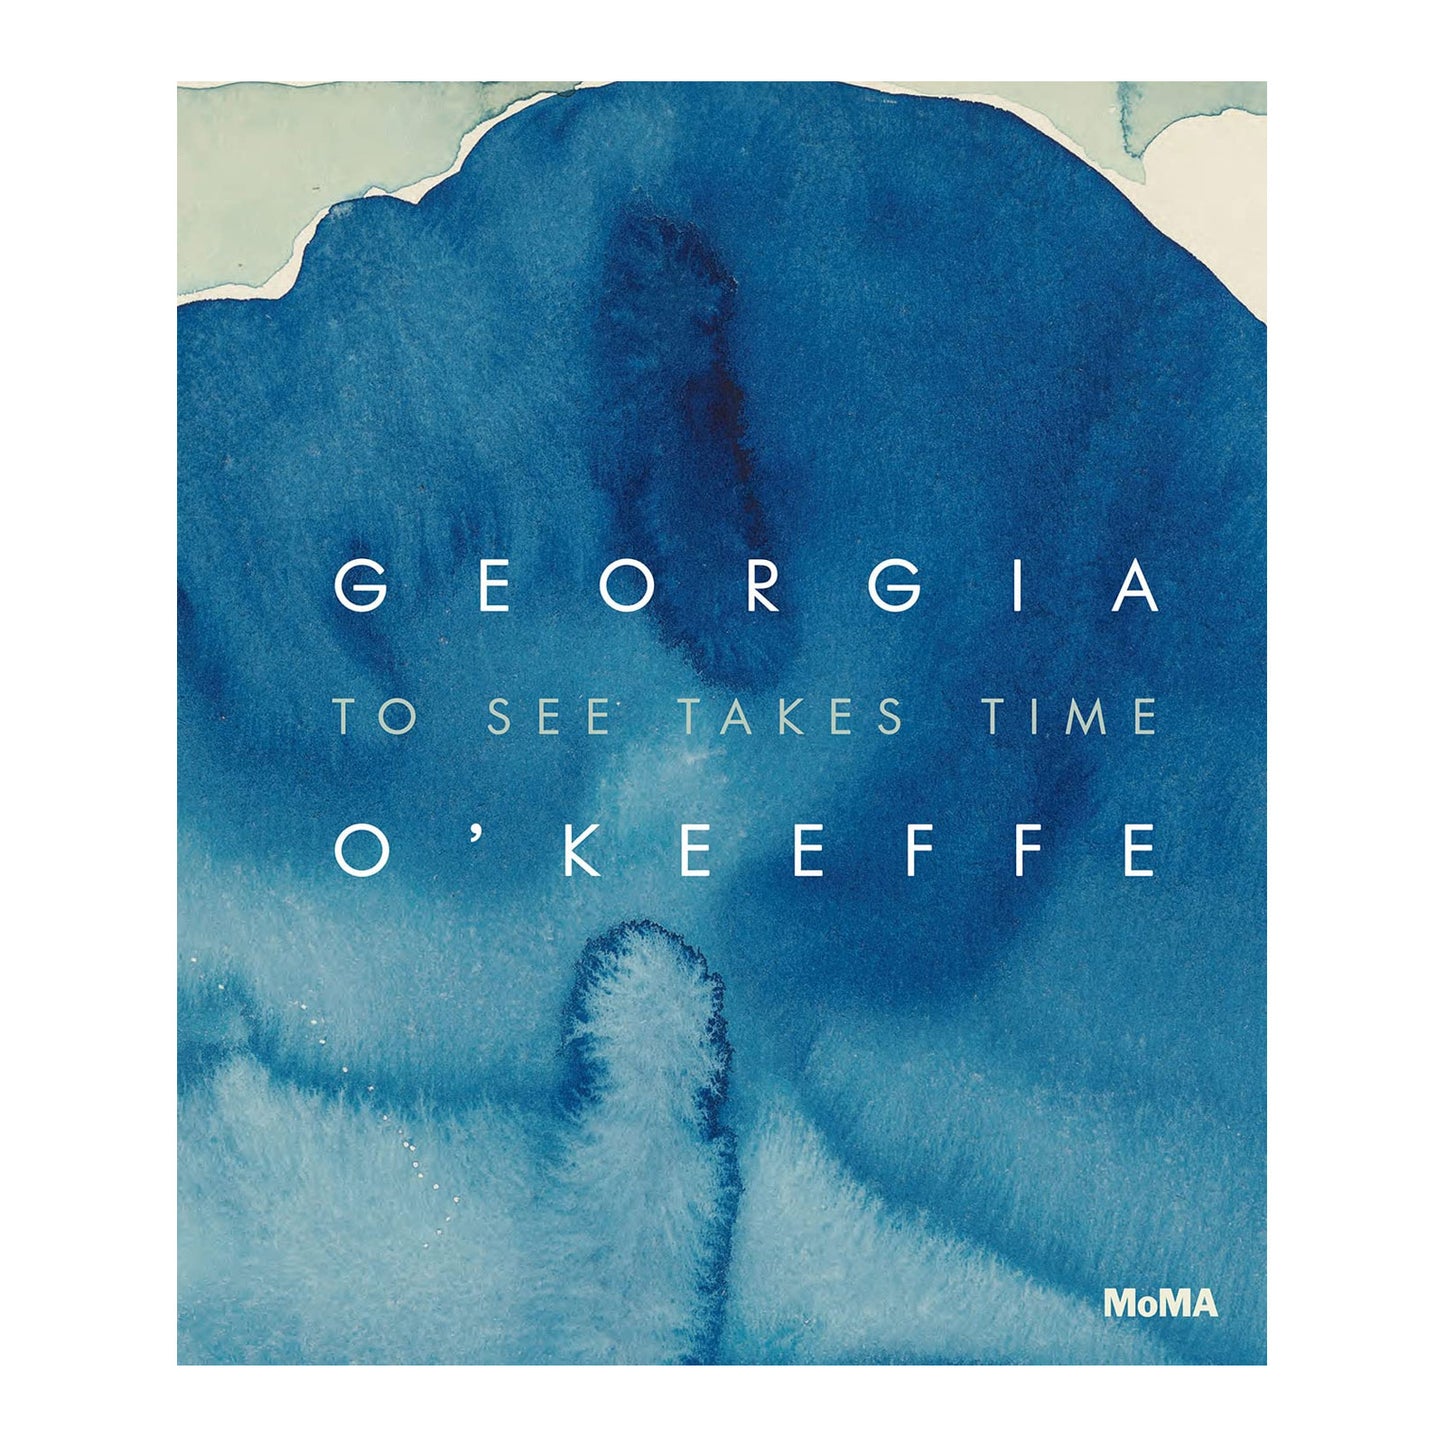 Georgia O’Keeffe: To See Takes Time